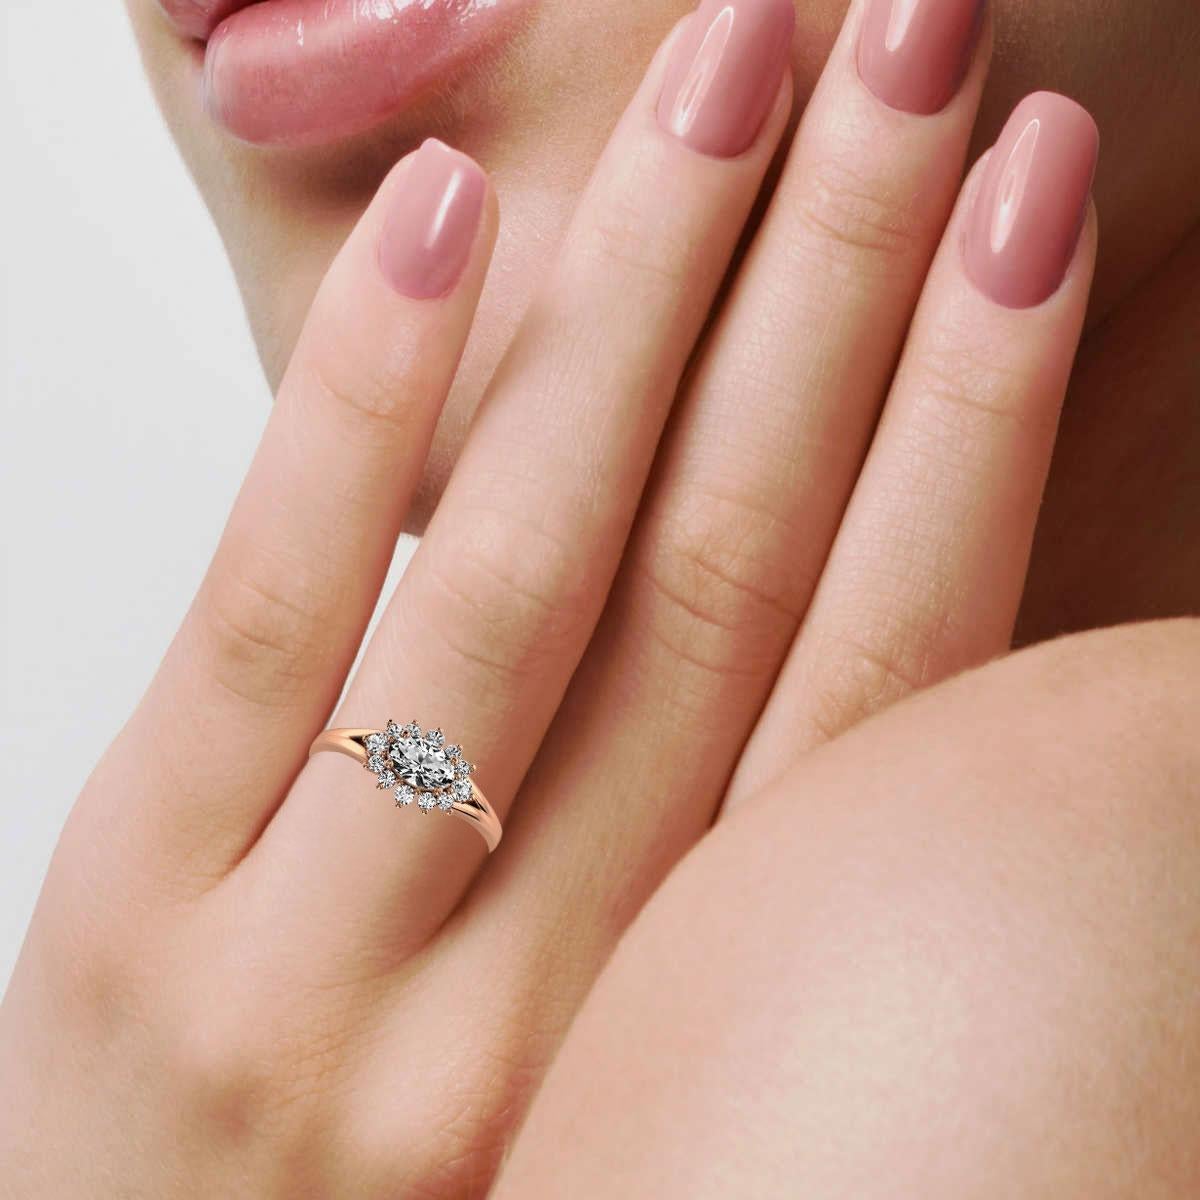 1 1 2 karat diamond ring